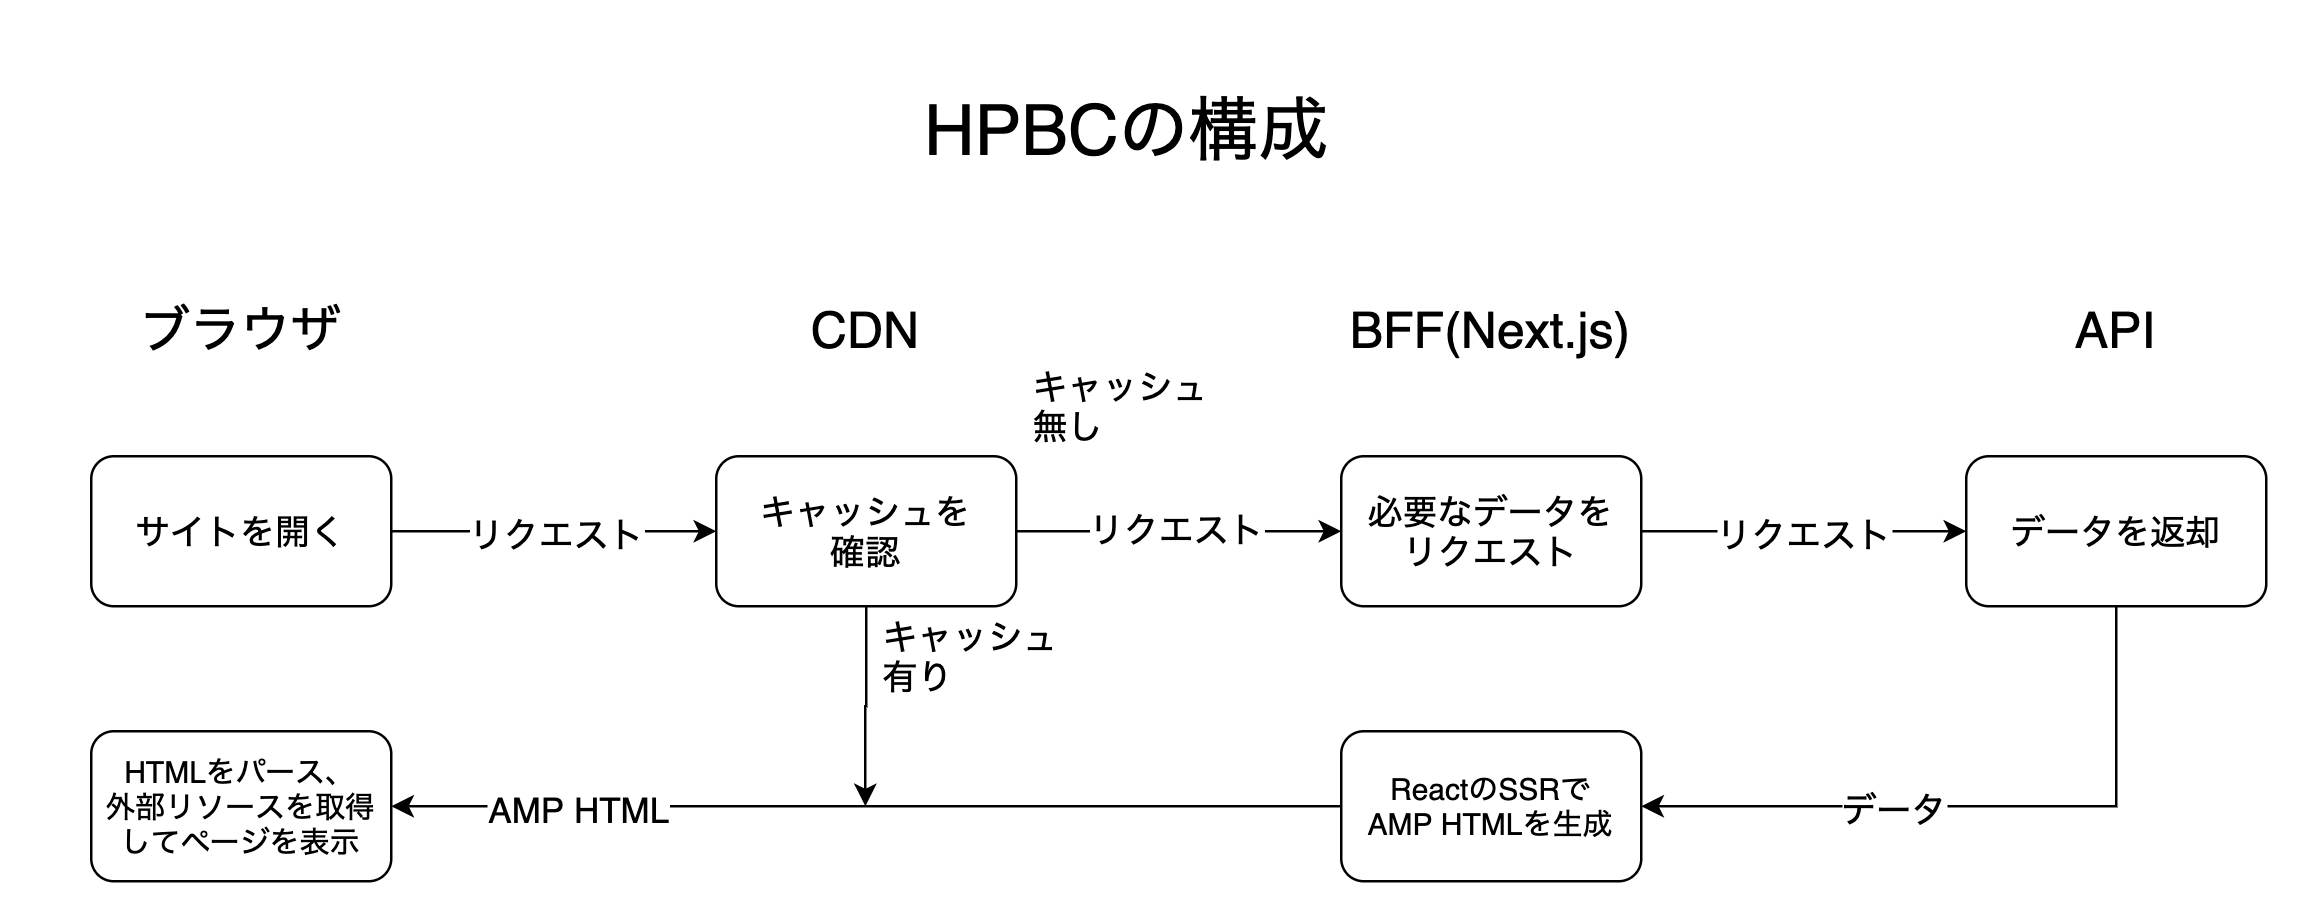 HPBC全体の構成